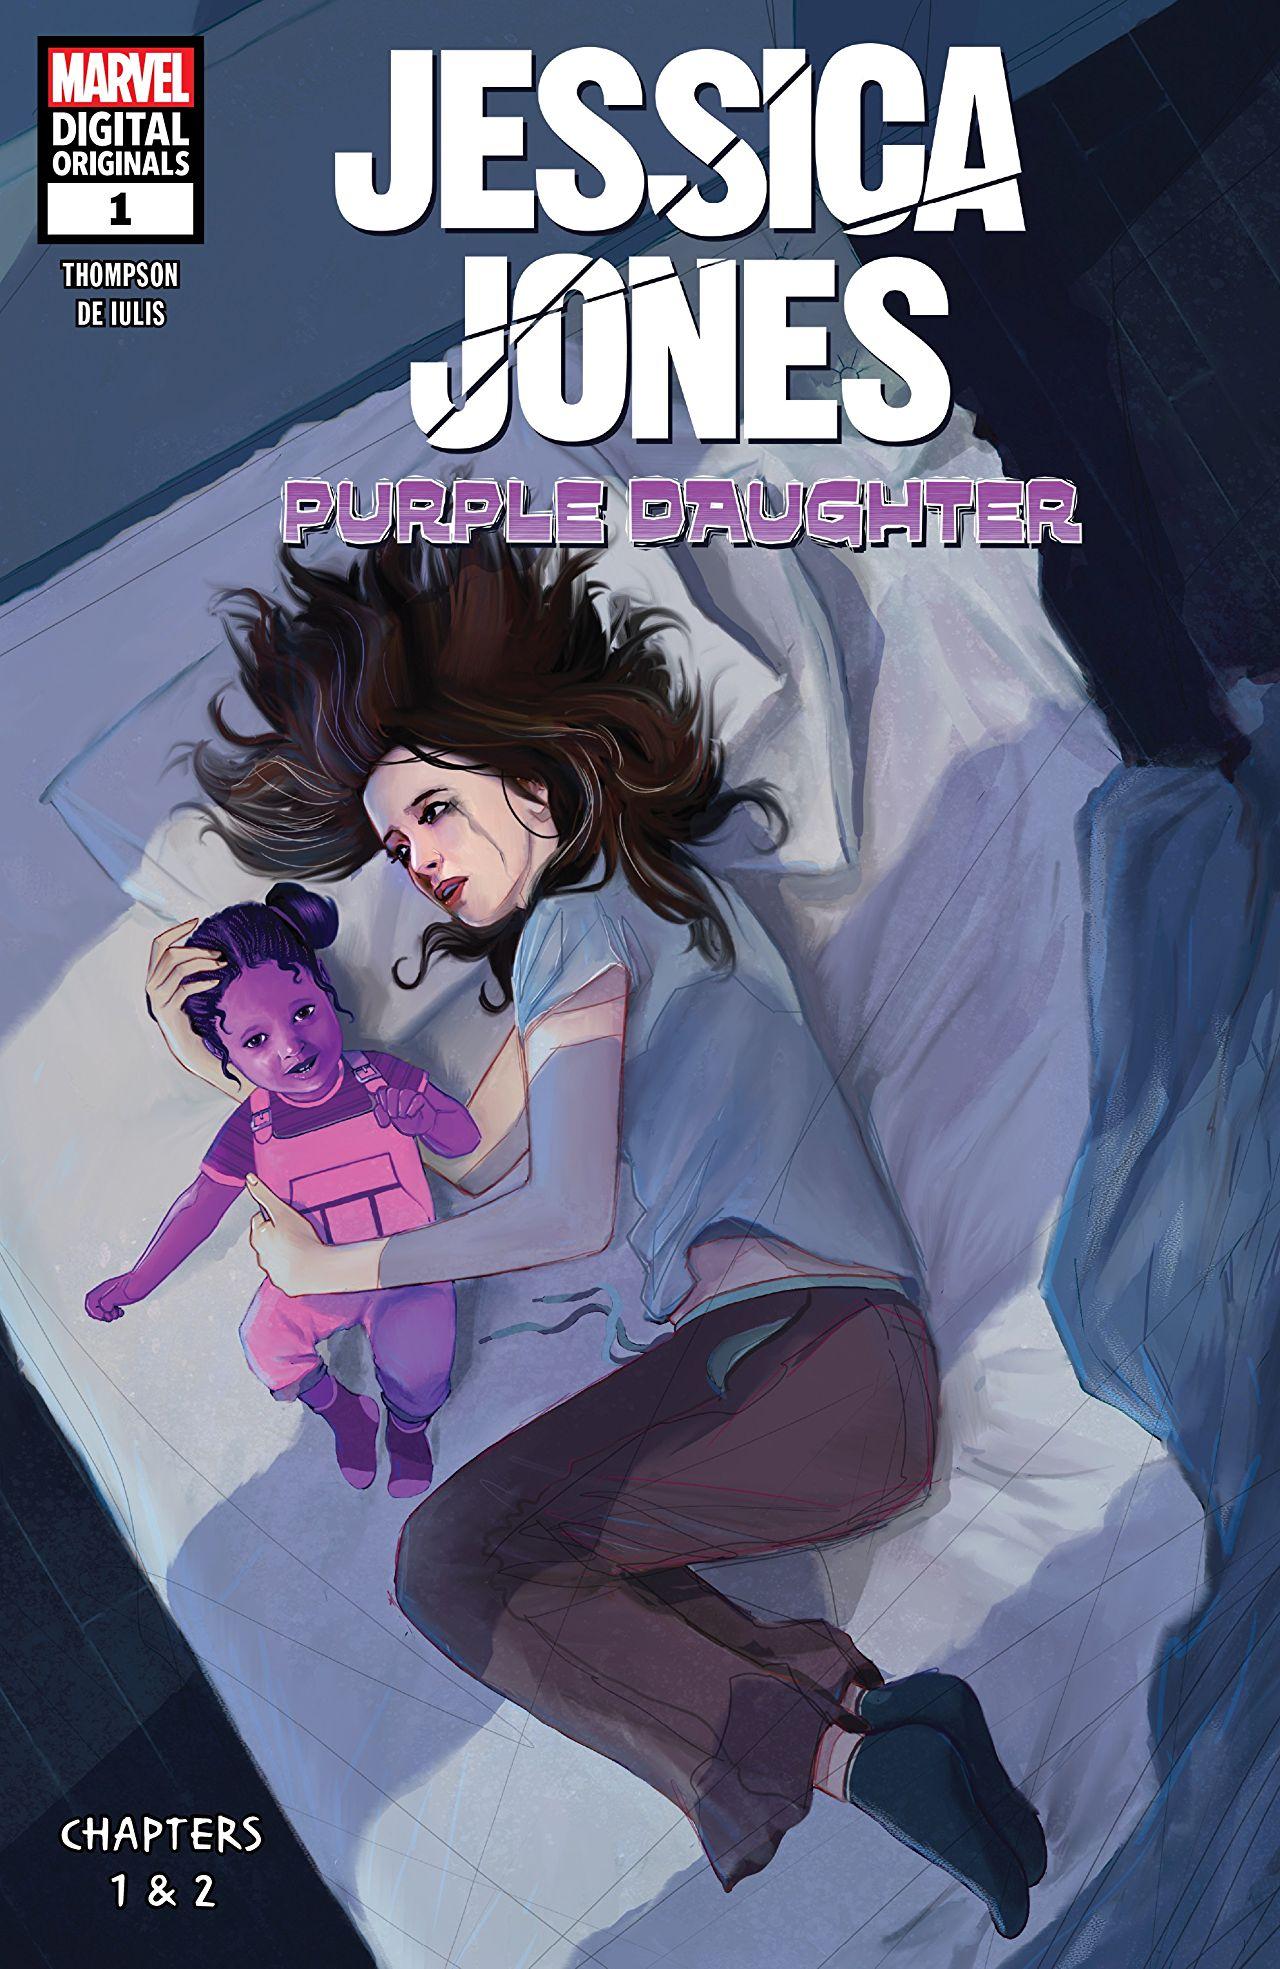 Jessica Jones: Purple Daughter - Marvel Digital Original Vol. 1 #1